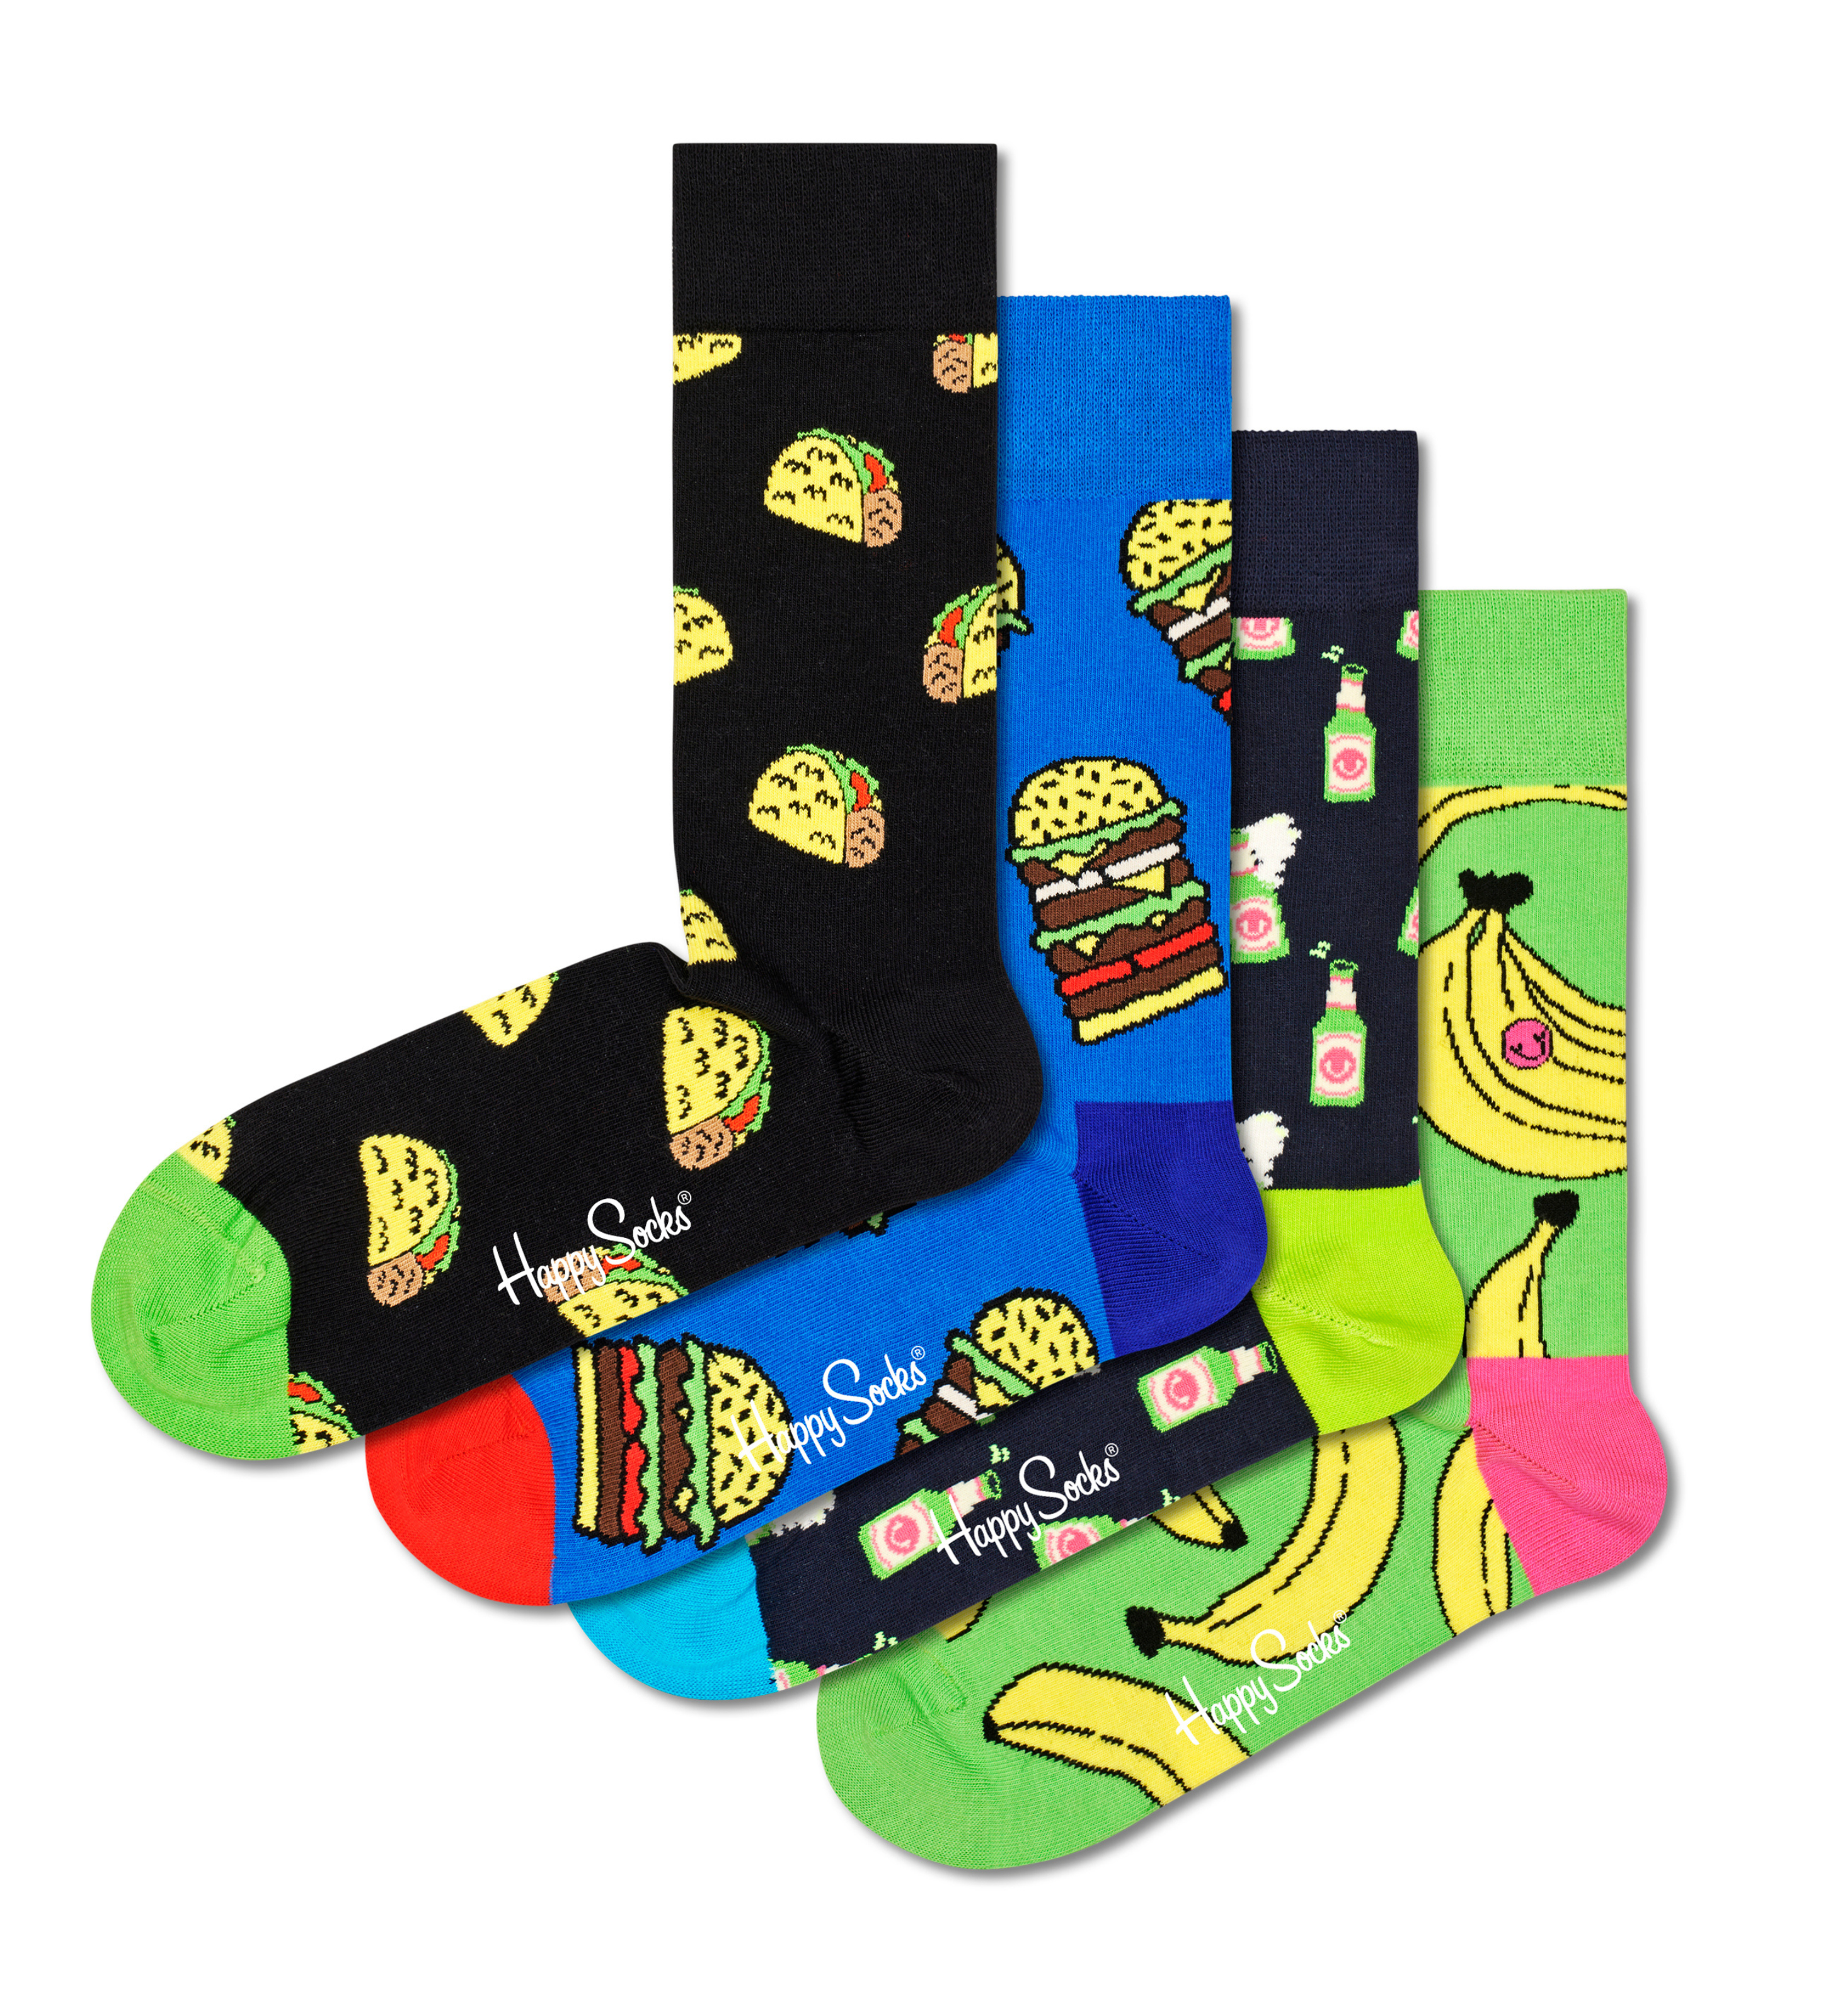 Healthy Lifestyle Socks Happy Socks Gift Set 4pc US 